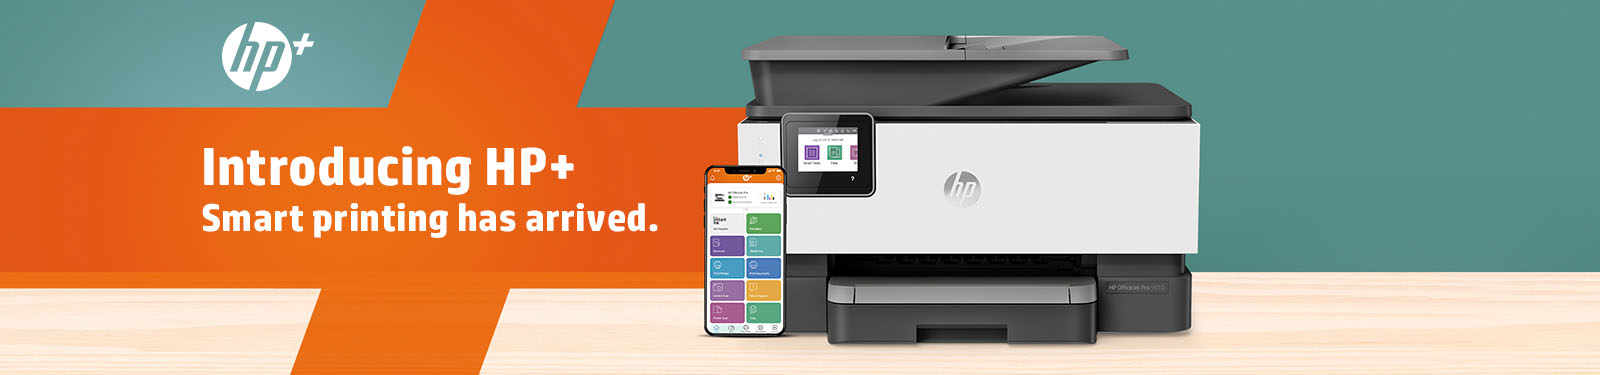 Introducing HP+ Smart Printing